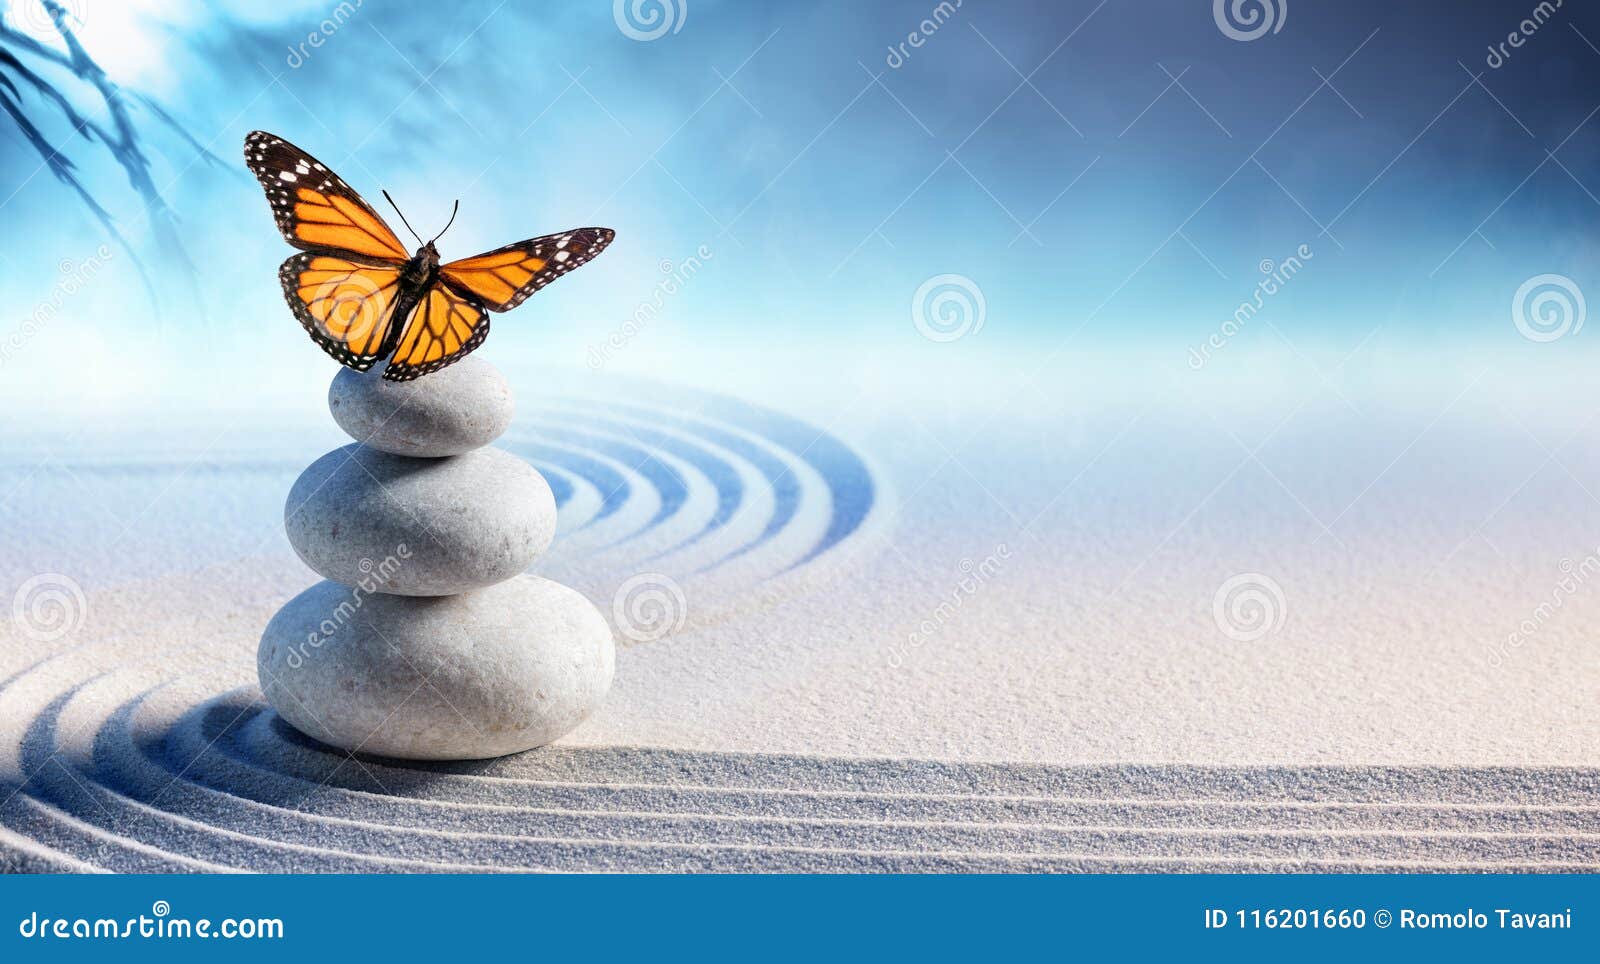 butterfly on spa massage stones